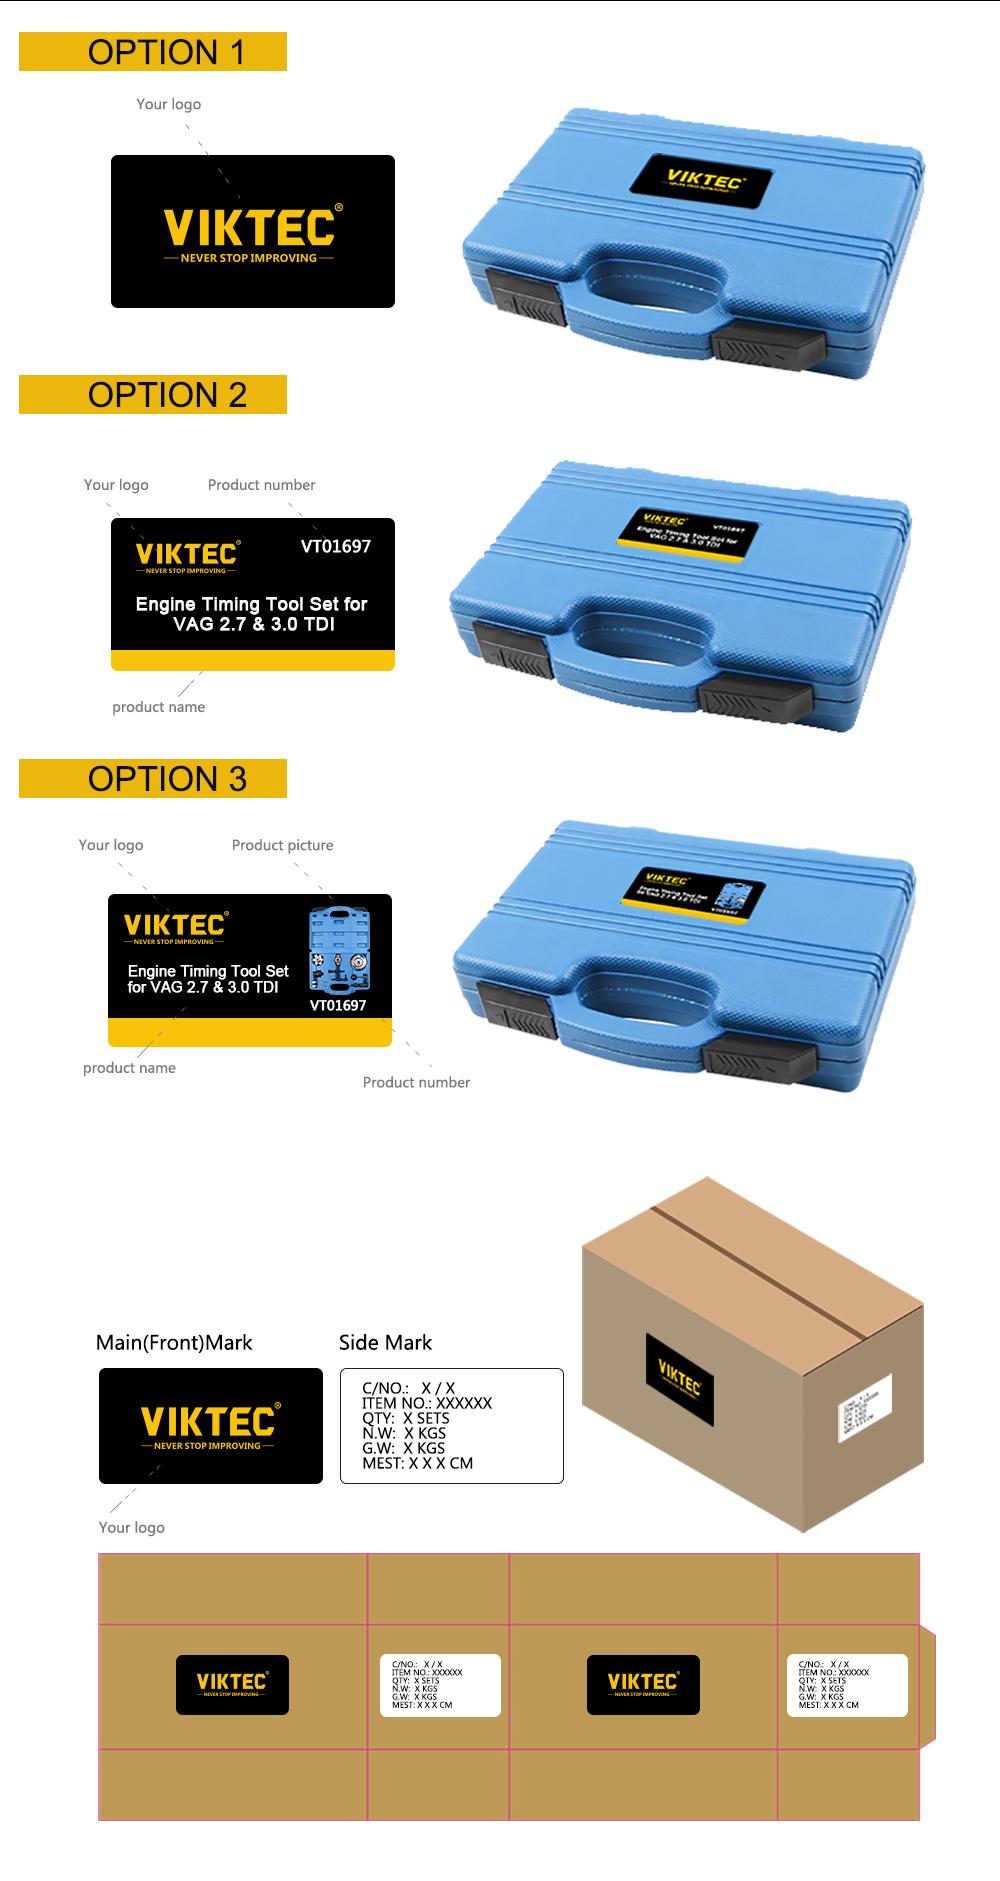 Viktec Universal 42PCS Thread Chaser Set, Rethread Repair Tool, Fractional and Metric Thread Restorer Tool Kit (VT01071)